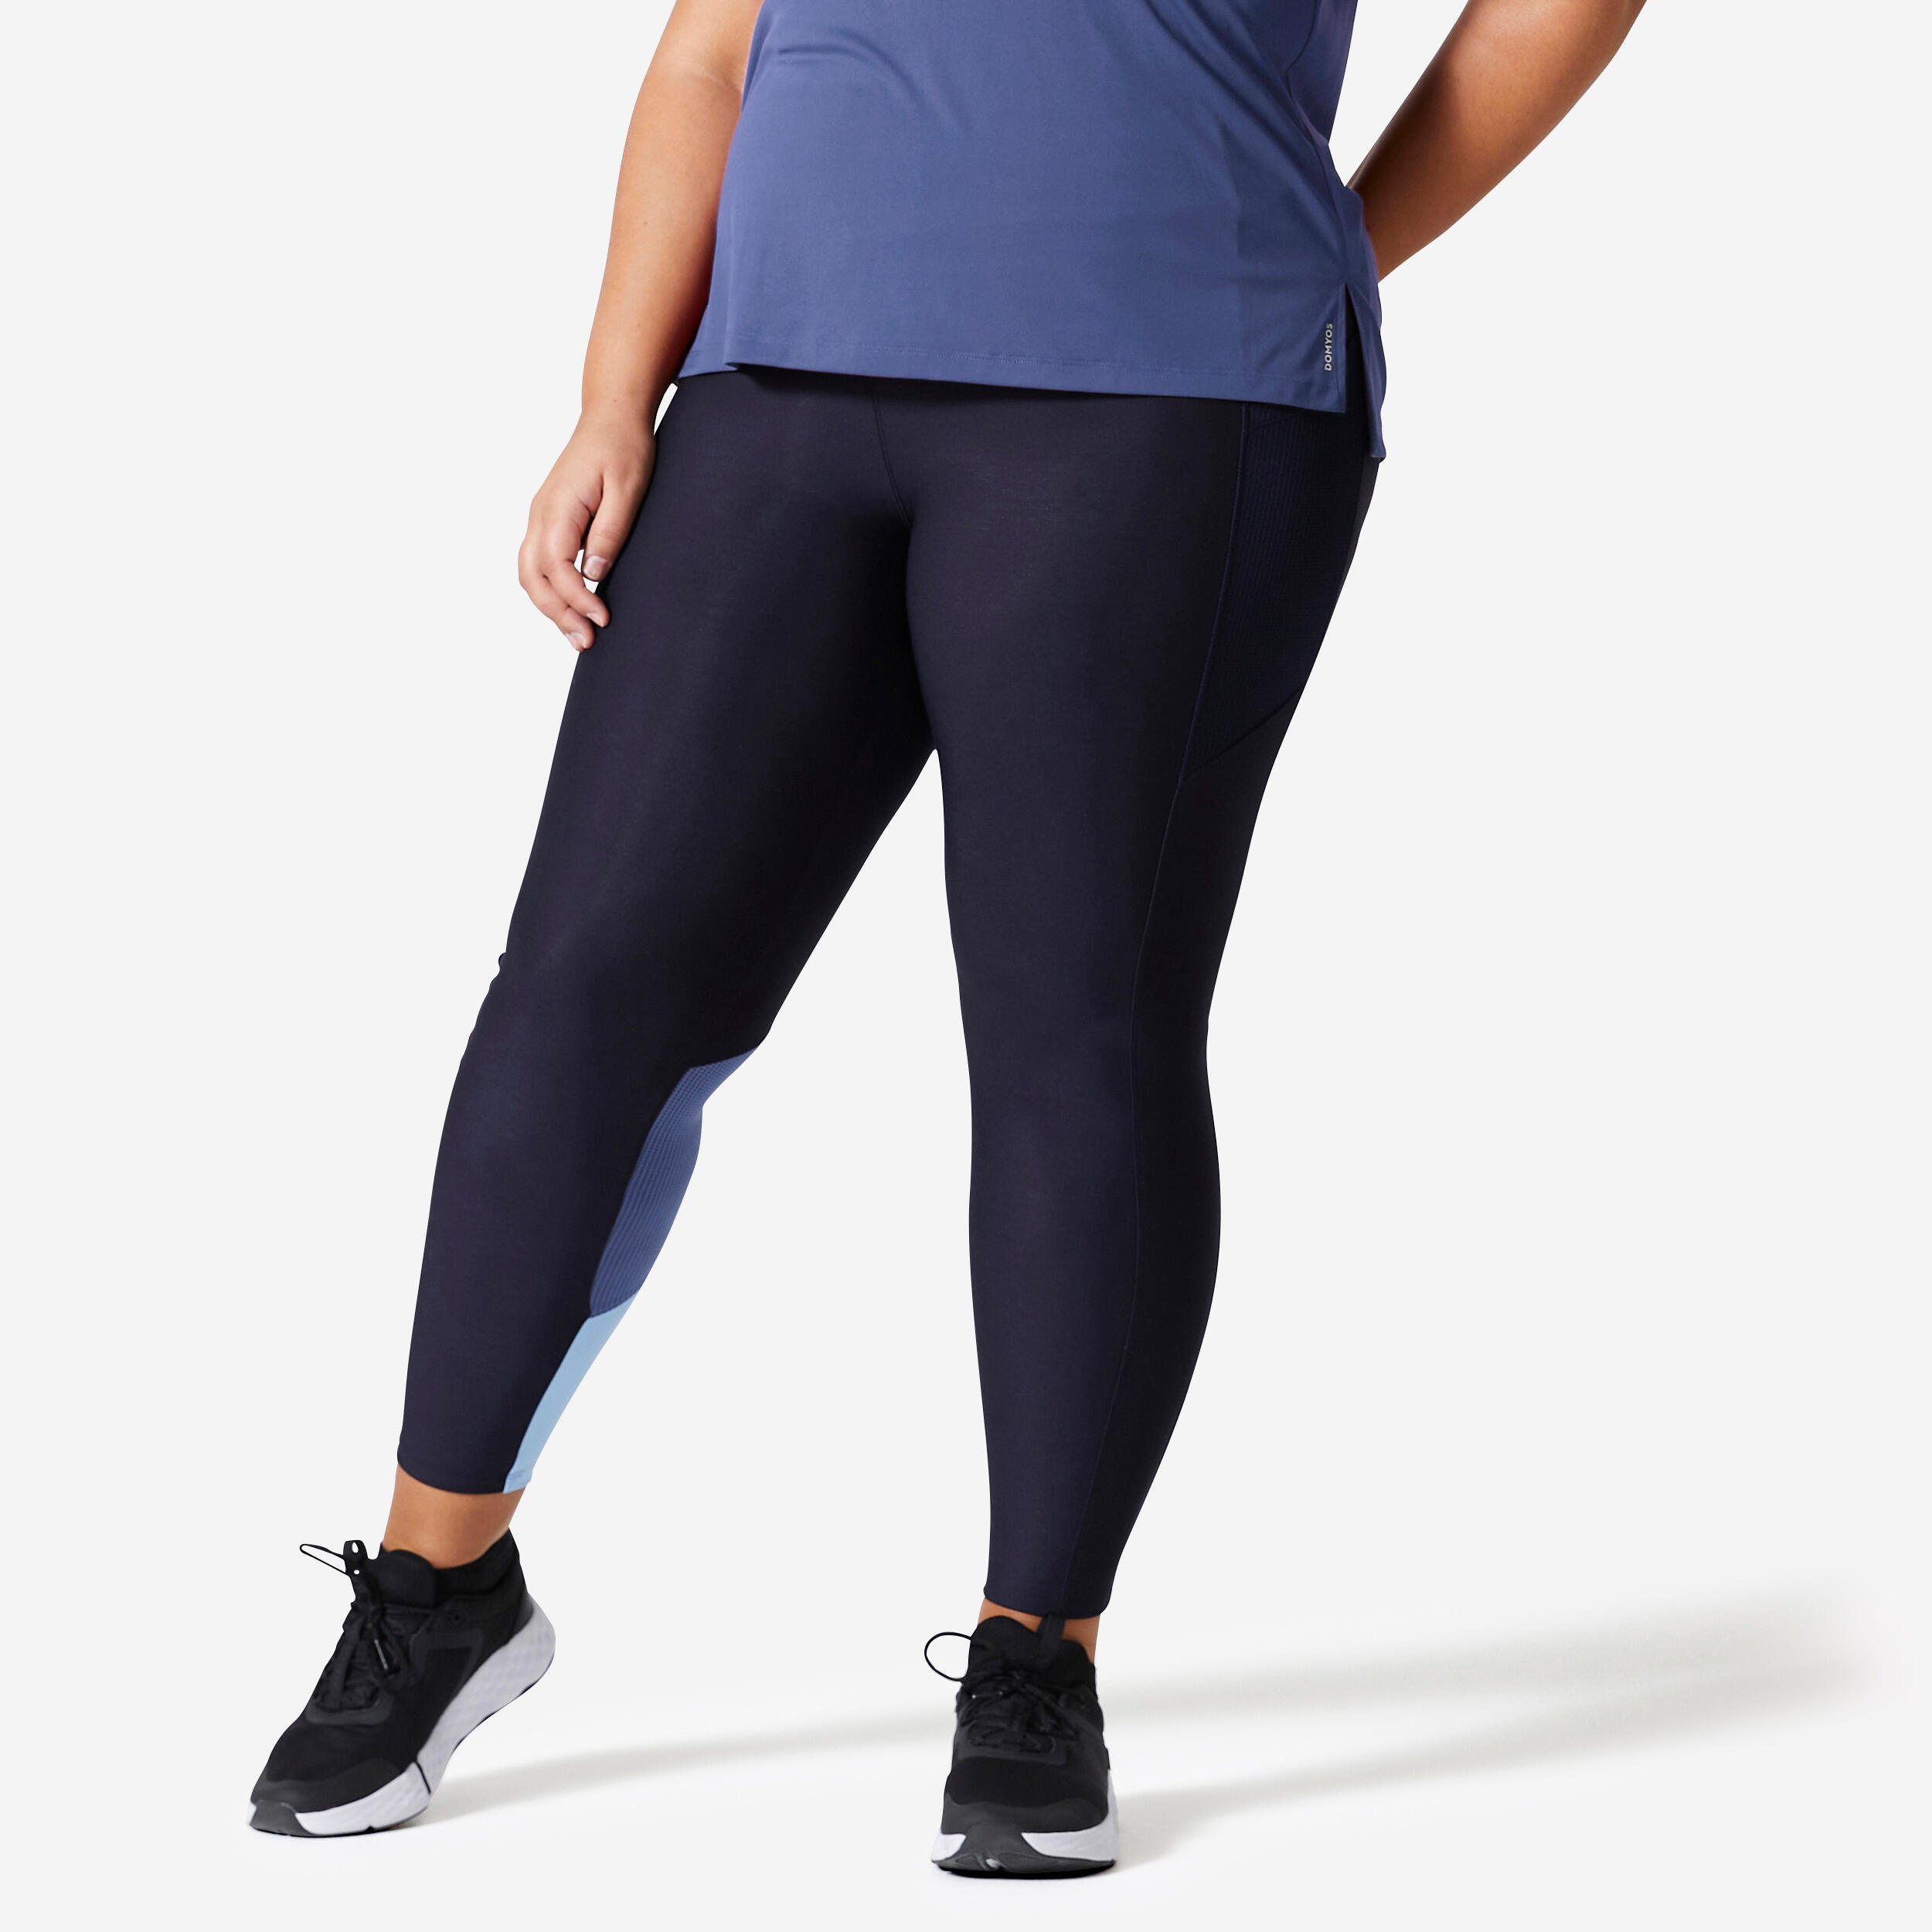 DOMYOS Women's Plus-Size Fitness Cardio Leggings with Pocket - Blue